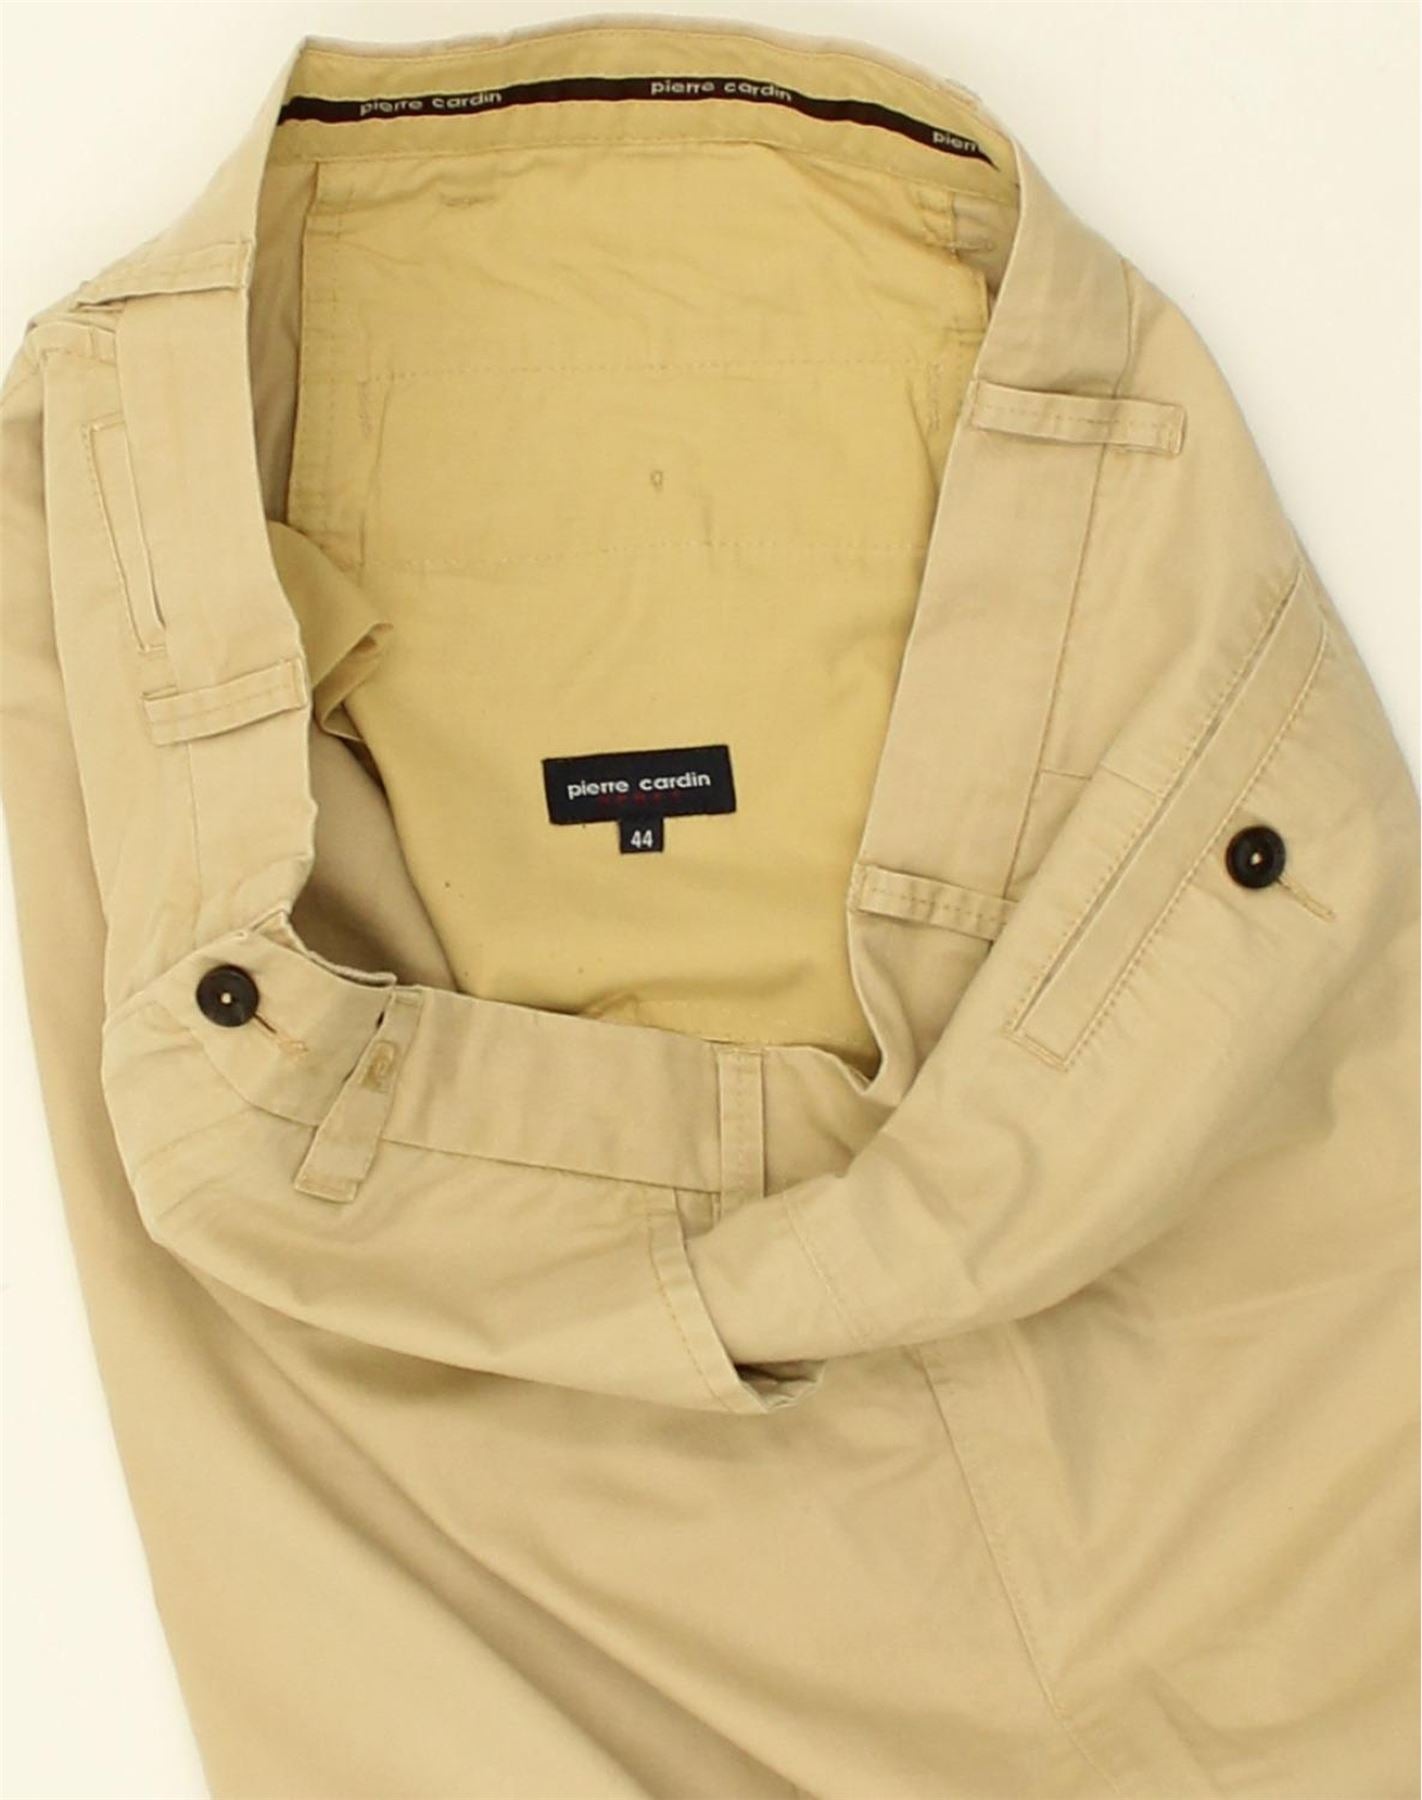 Pierre Cardin Mens Dress Pants Dark Gray Pockets Flat Front 42 x 28.5 | eBay